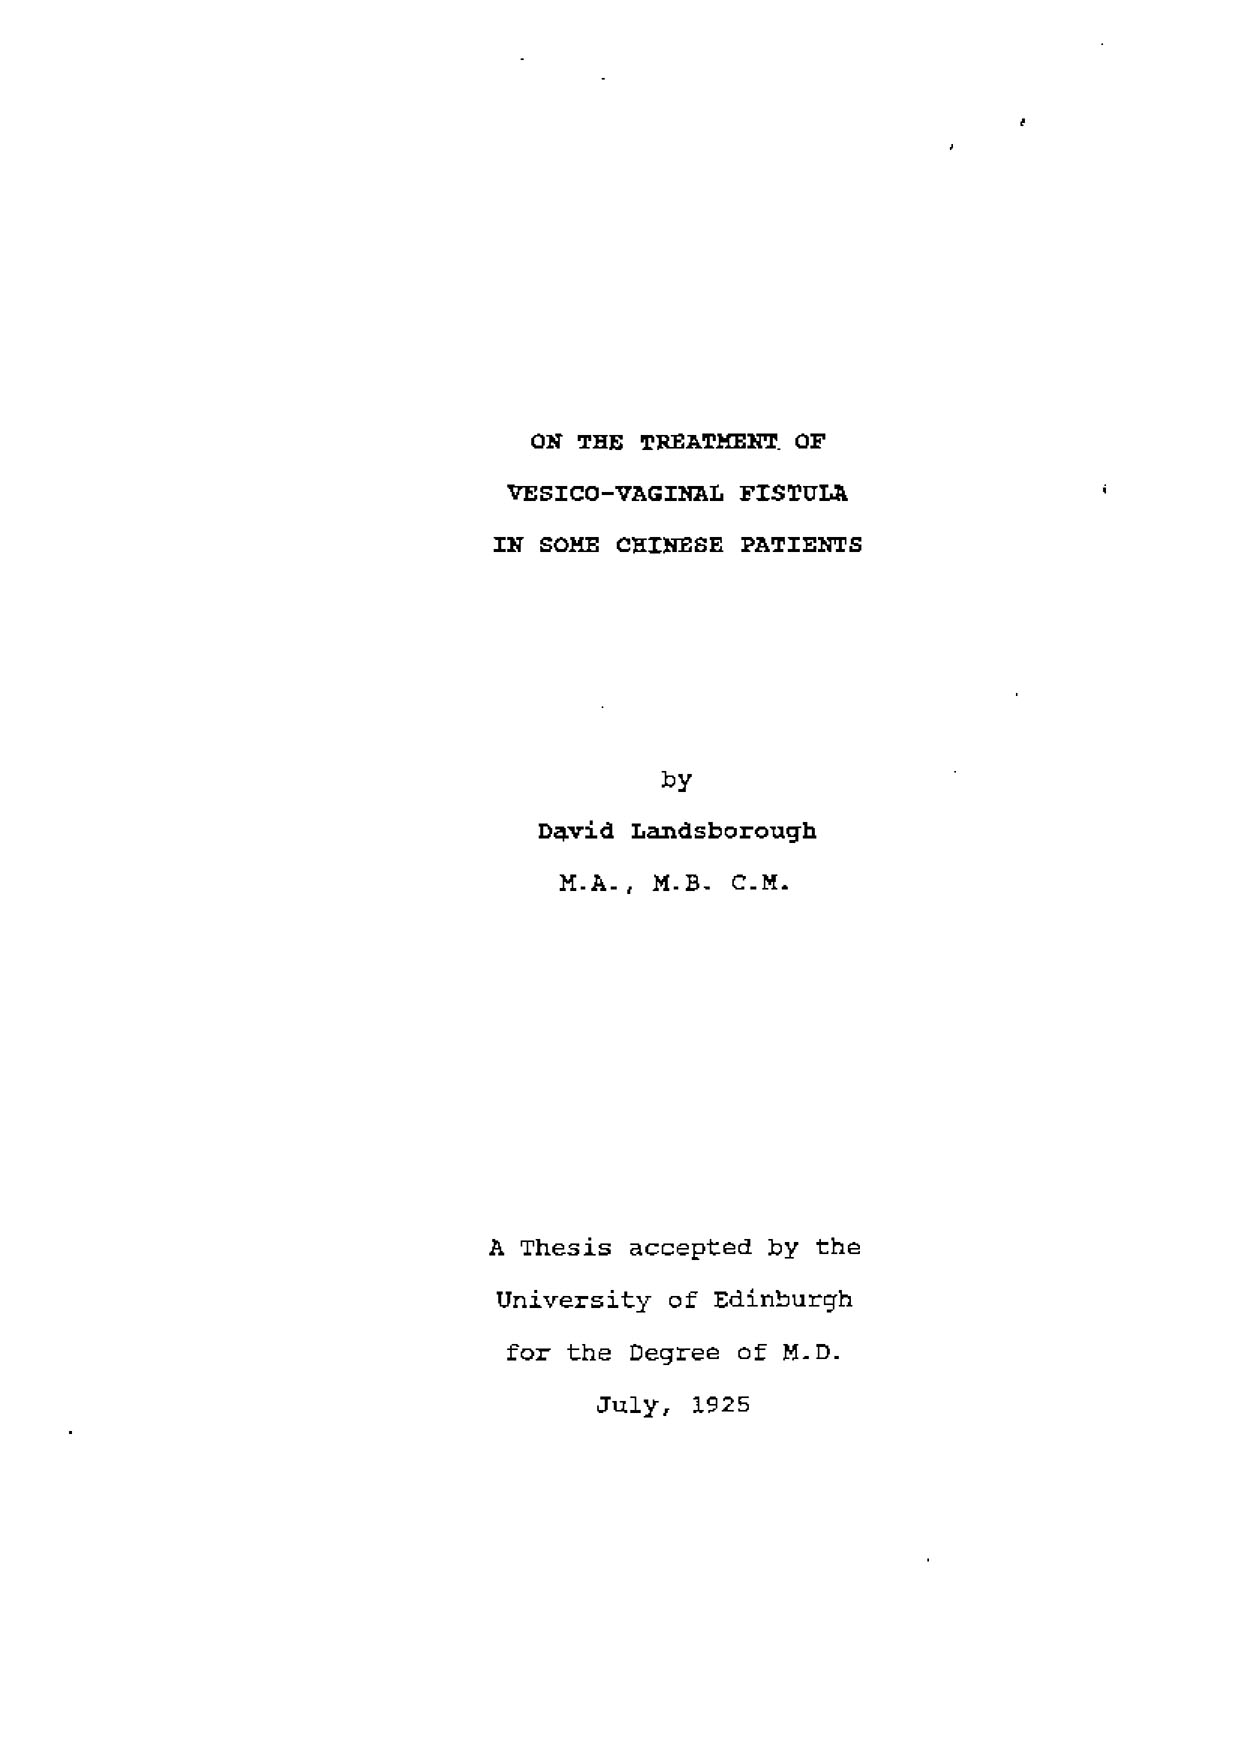 PhD thesis of David III 蘭大衛博士論文-1.jpg